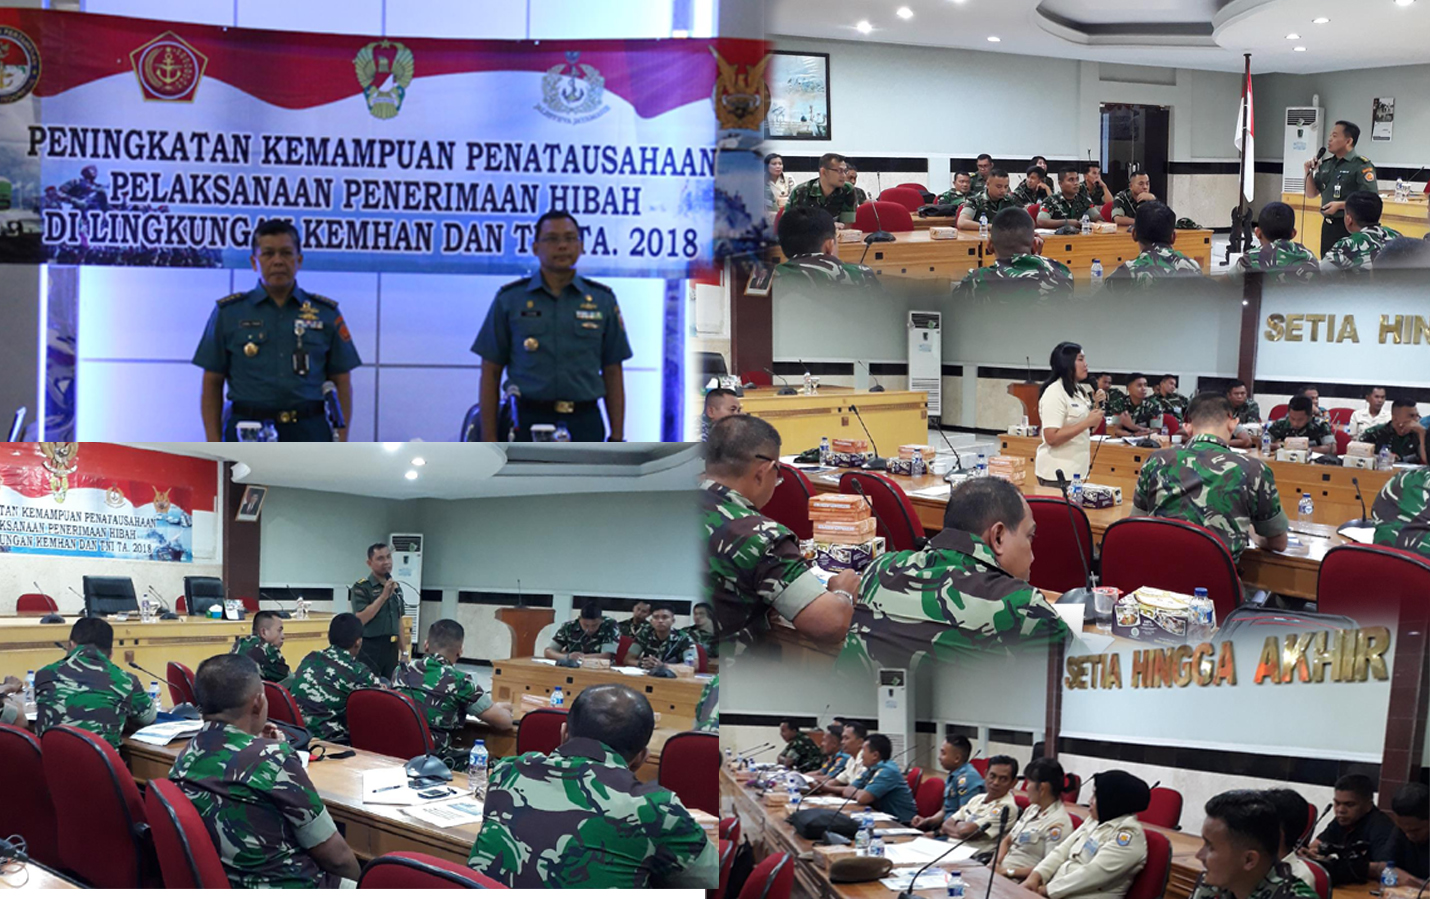 180924 Peningkatan Kemampuan Pelaksanaan Penatausahaan Penerimaan Hibah di Lingkungan KEMHAN dan TNI TA. 2018 di Makasar dan Man